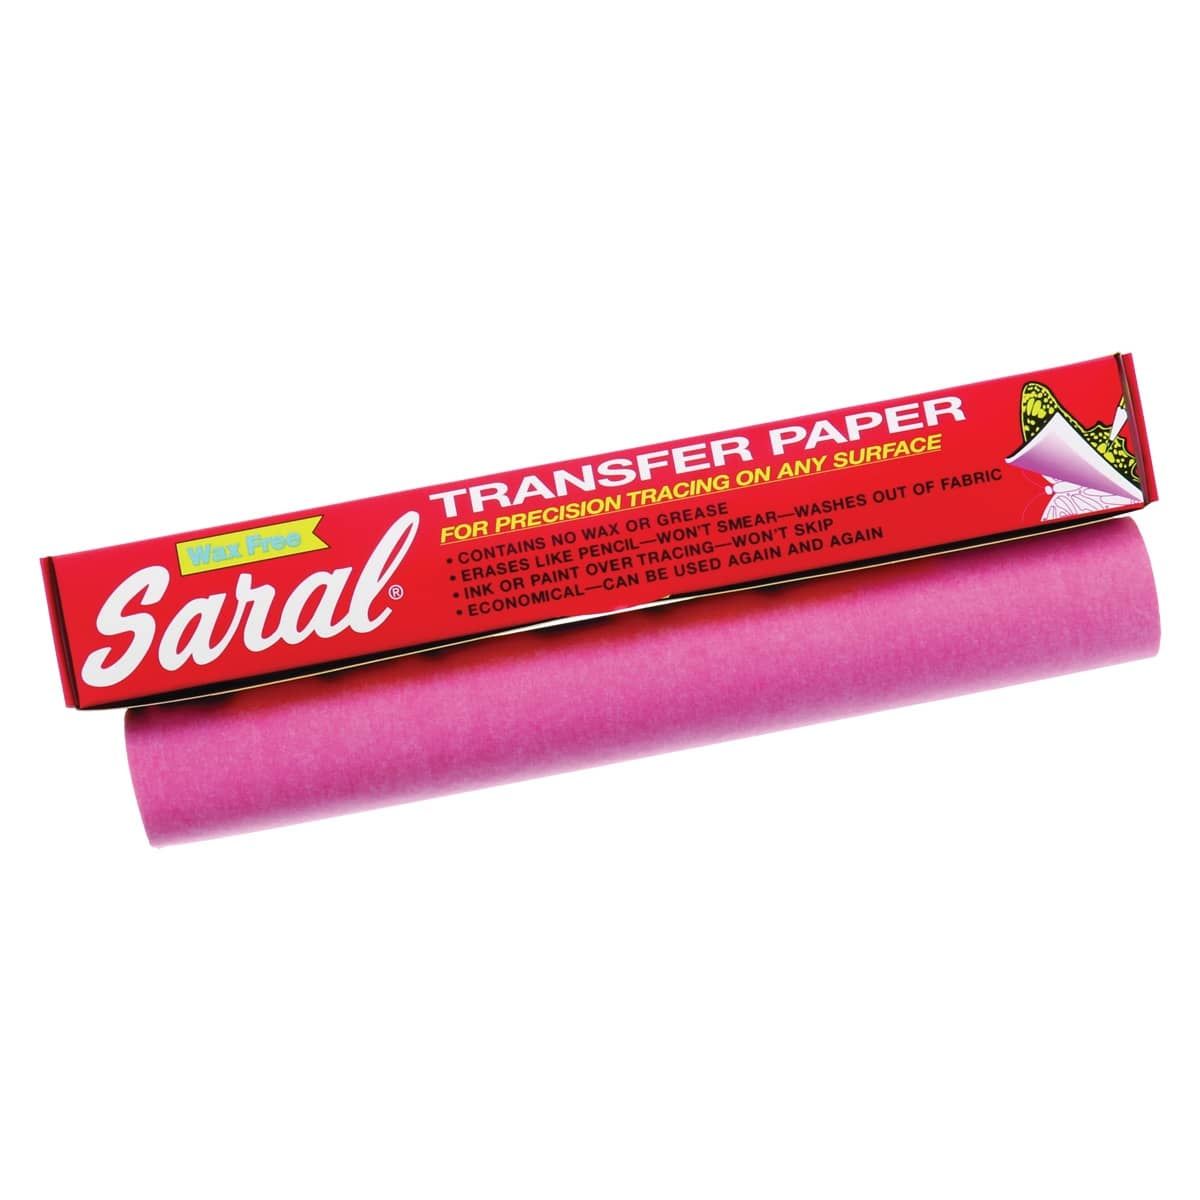 Saral Transfer Paper